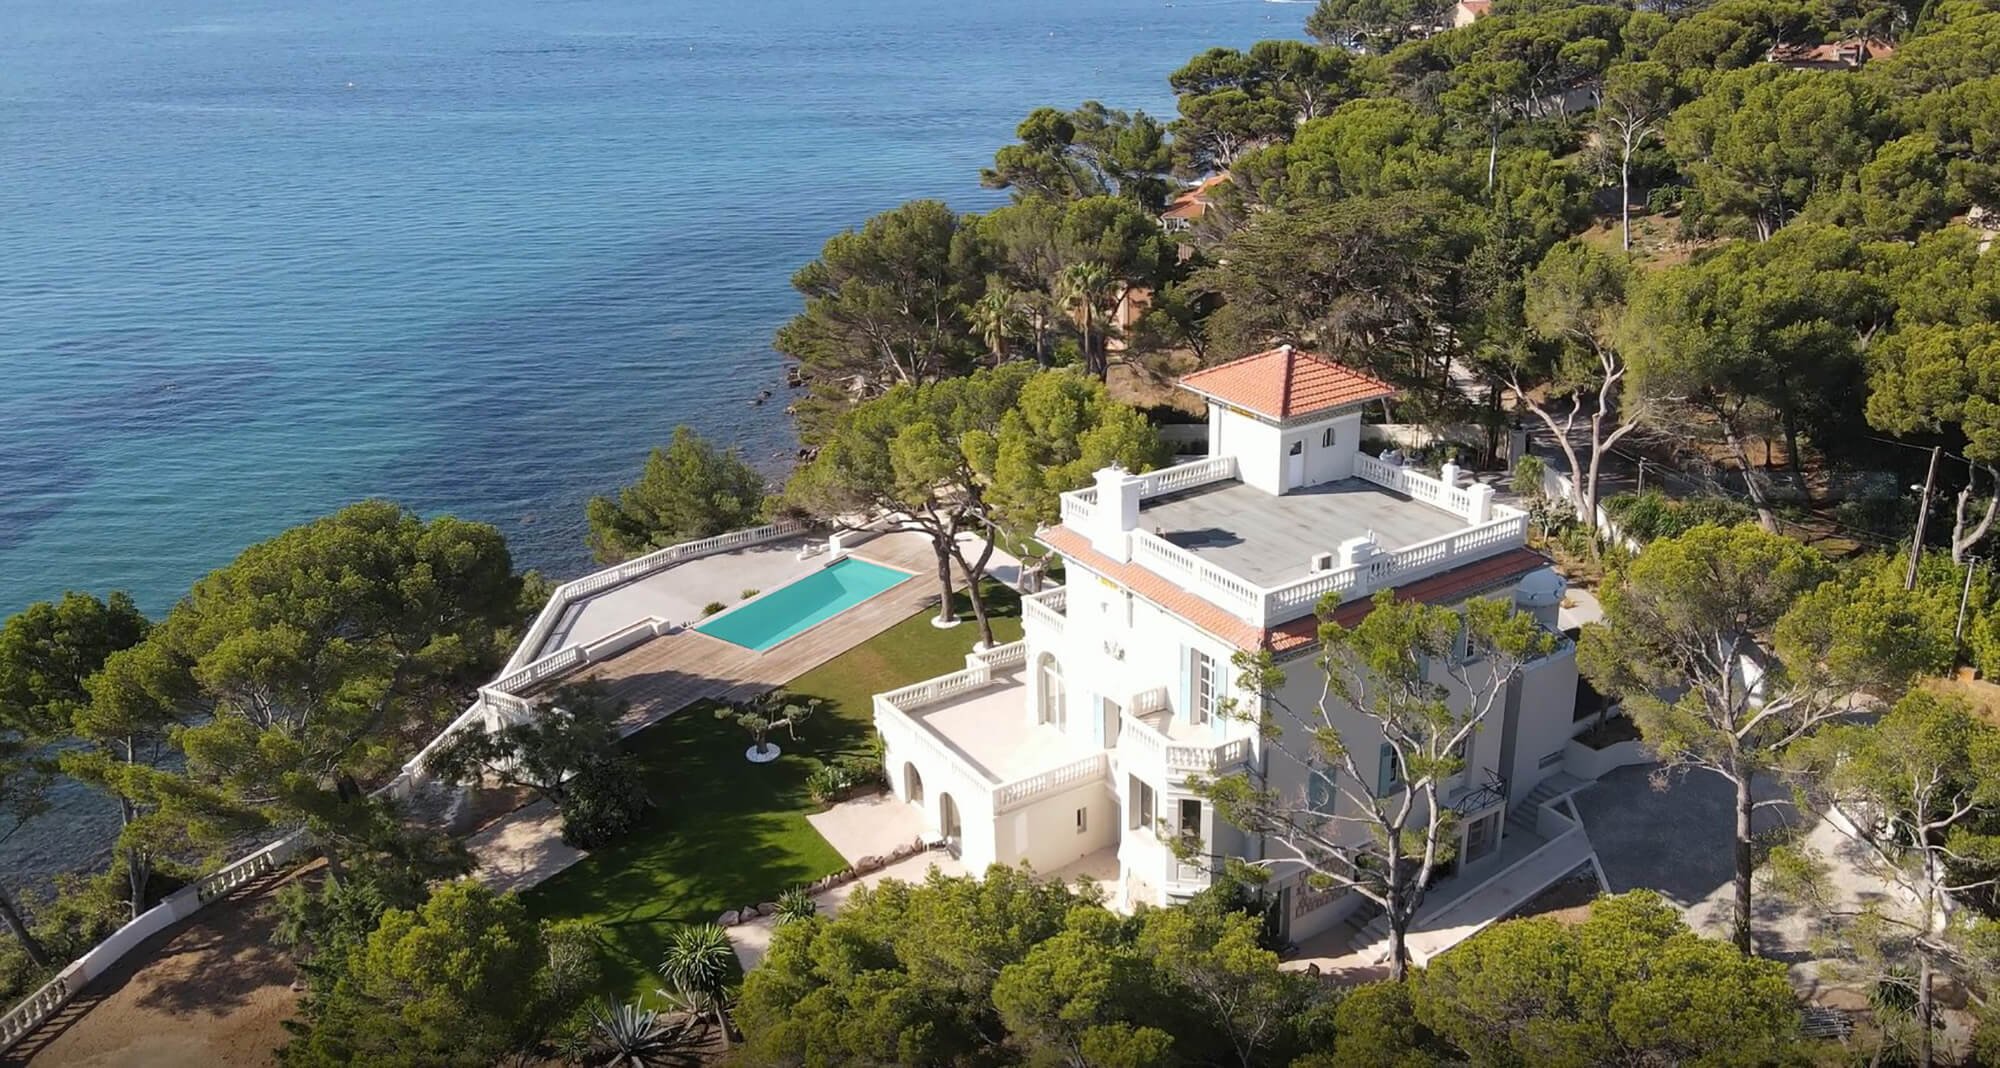 Luxury villa on the Mediterranean at Côte d'Azur near Toulon